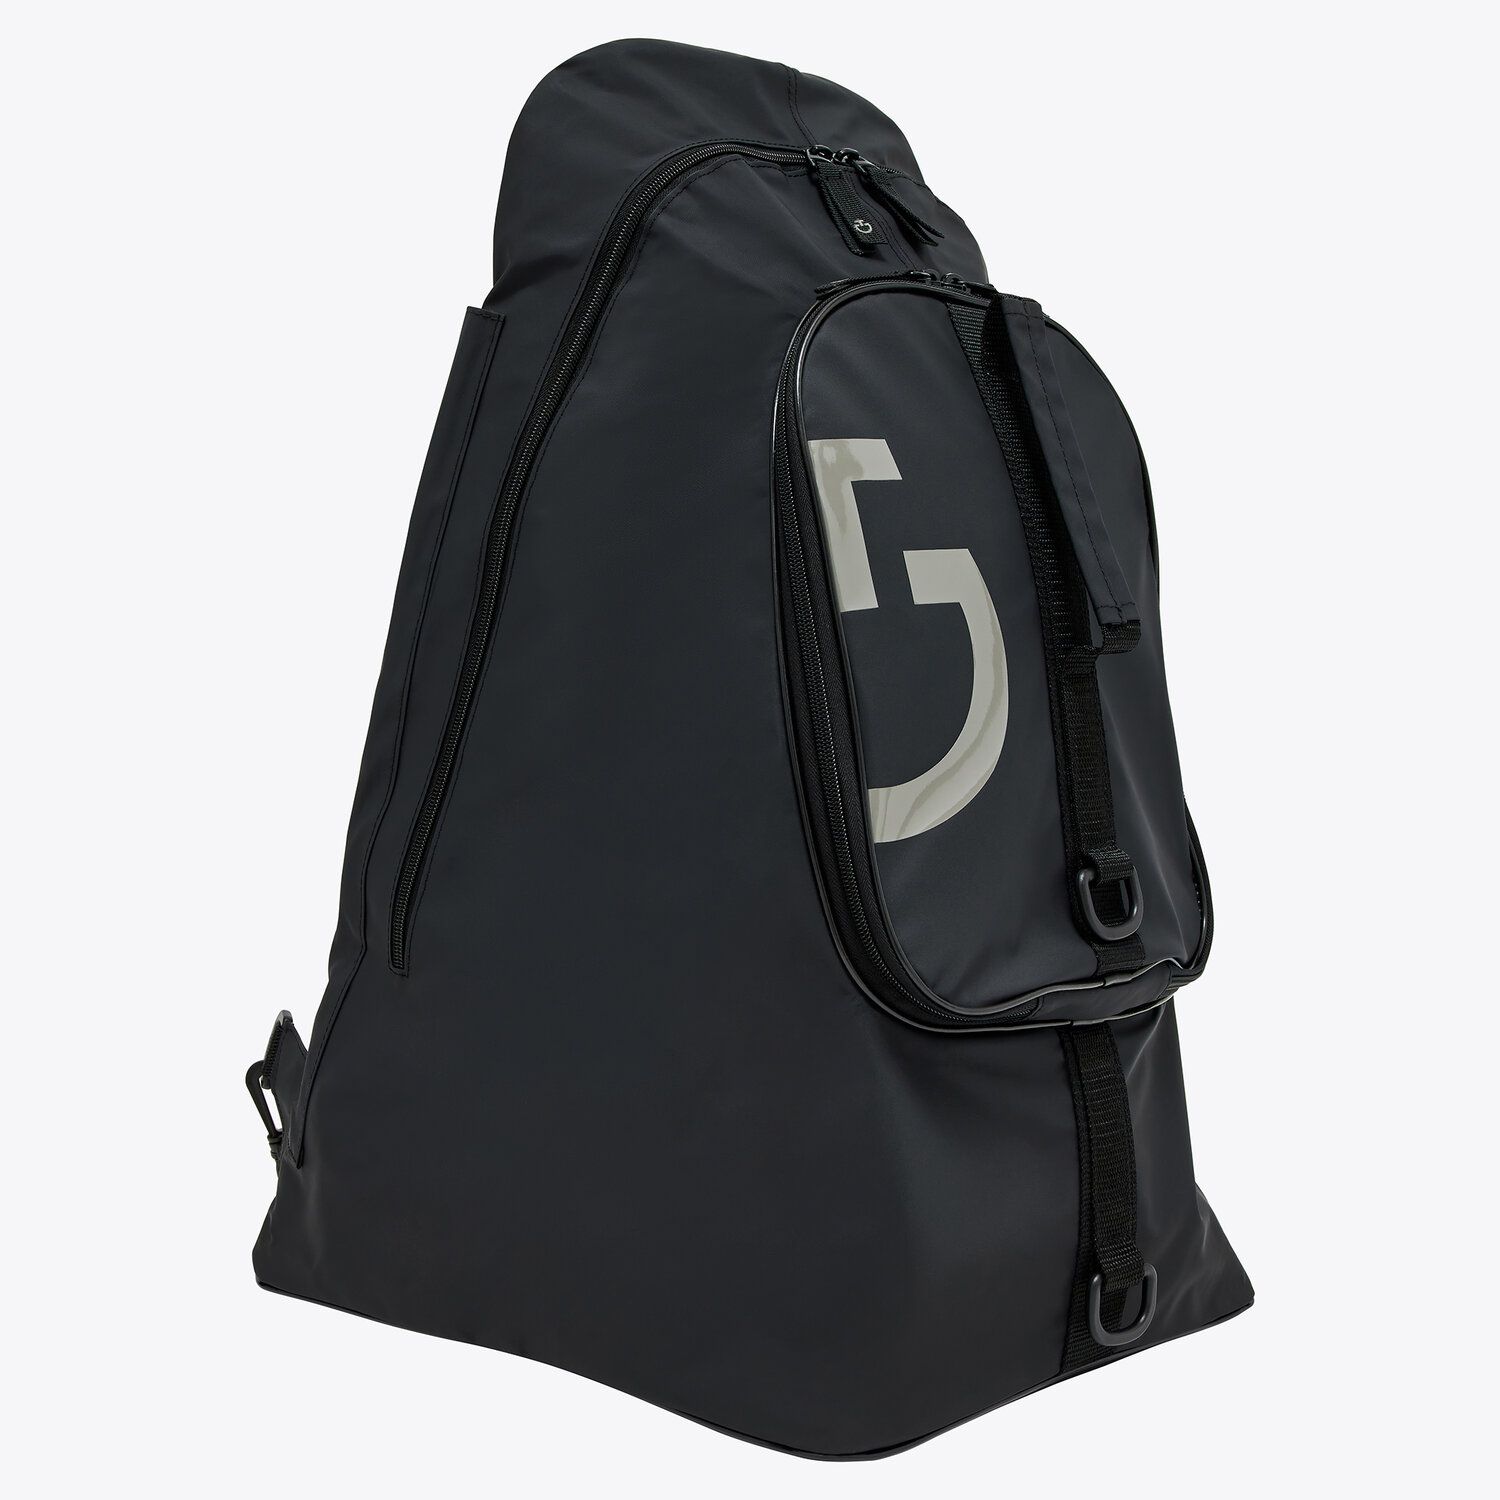 Cavalleria Toscana Equestrian backpack. BLACK-2